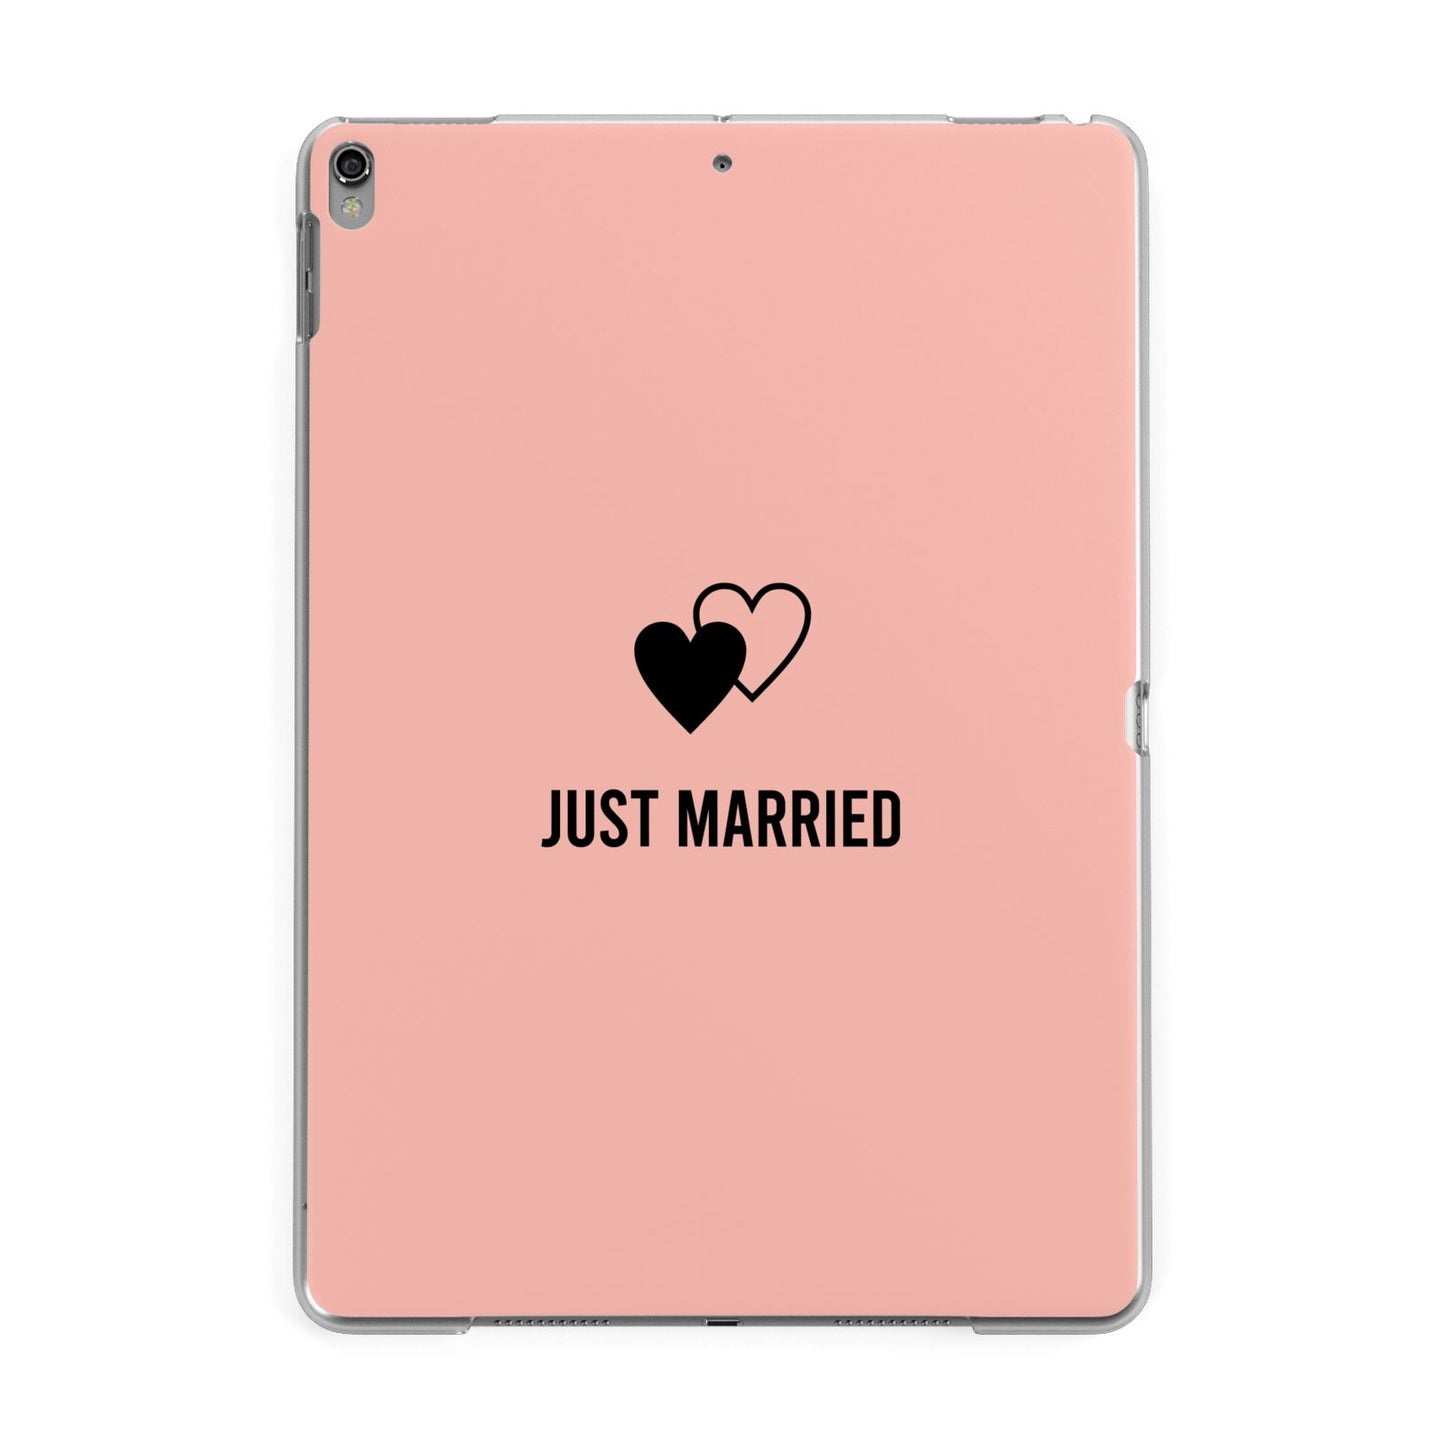 Just Married Apple iPad Grey Case